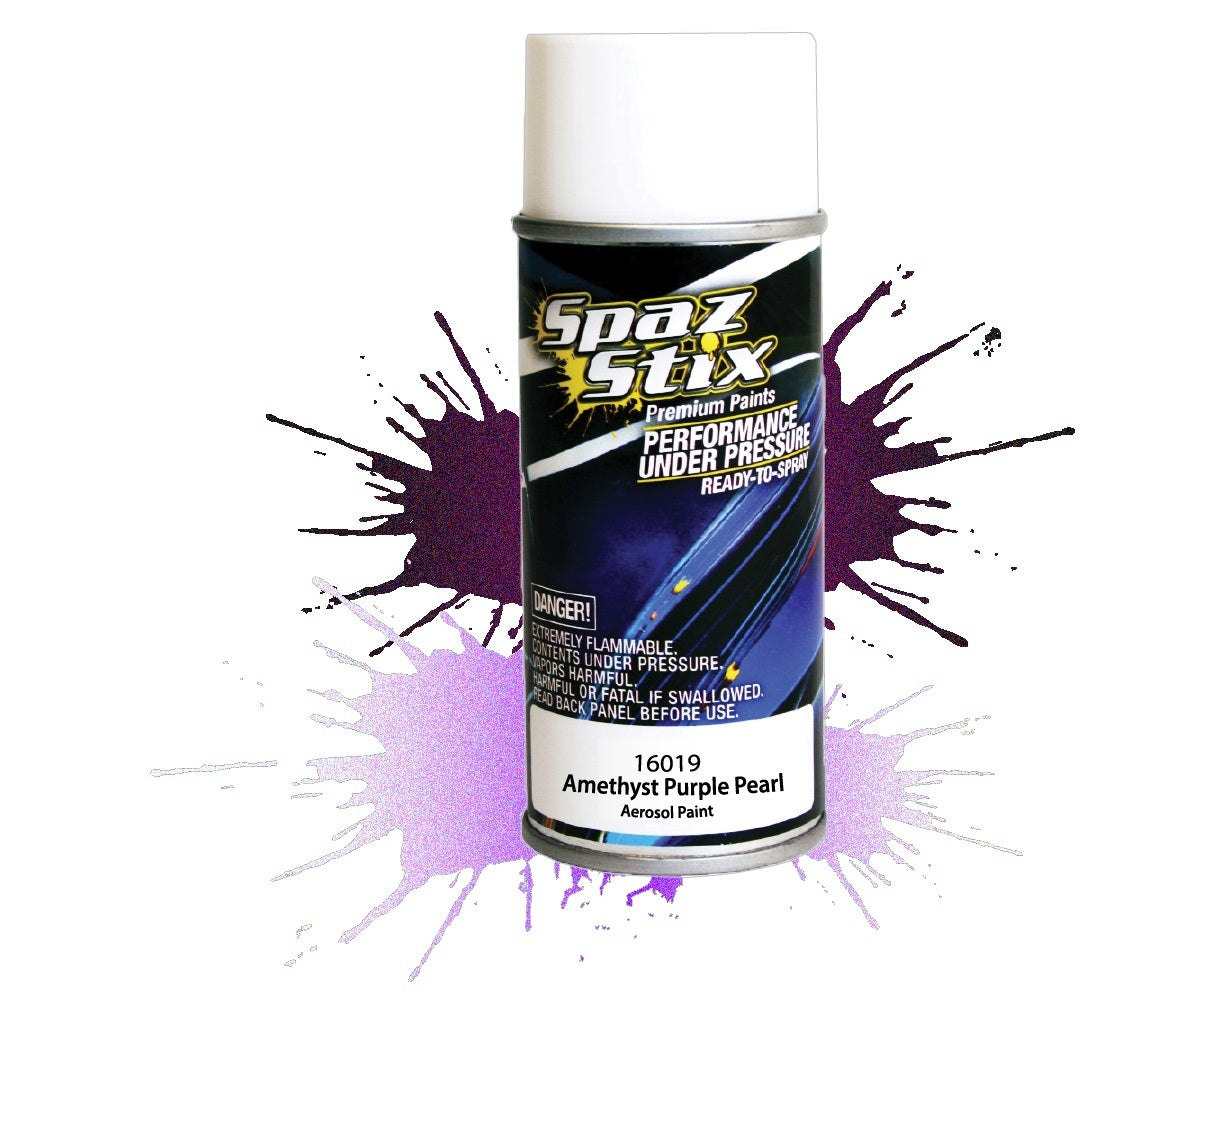 Spazstix Amethyst Purple Pearl Aerosol Paint 3.5Oz - Szxa16019 - [Sunshine-Coast] - Spazstix - [RC-Car] - [Scale-Model]